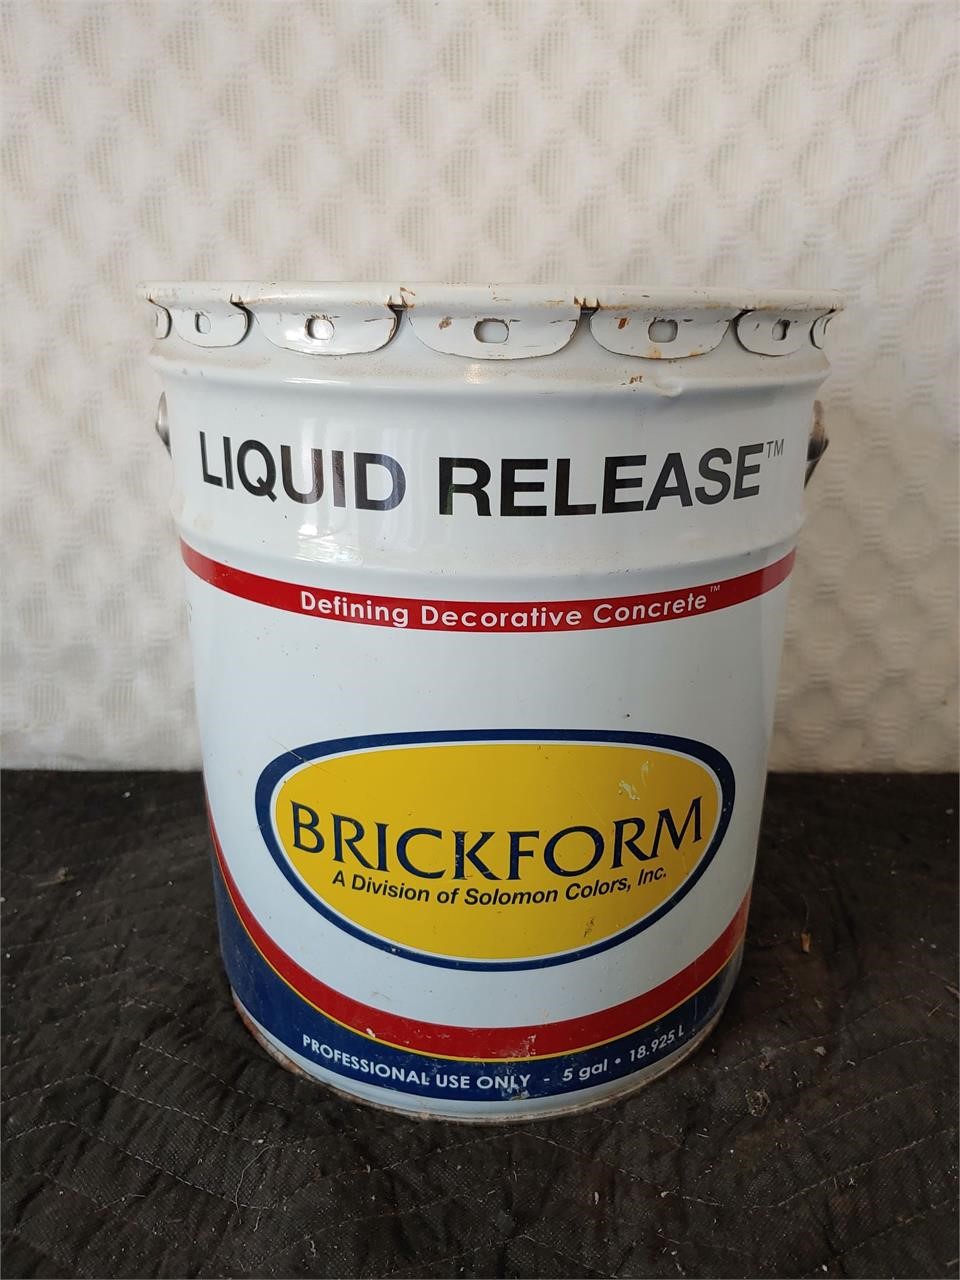 1/2 Full 5 gal Bucket of Brickform Liquid Release